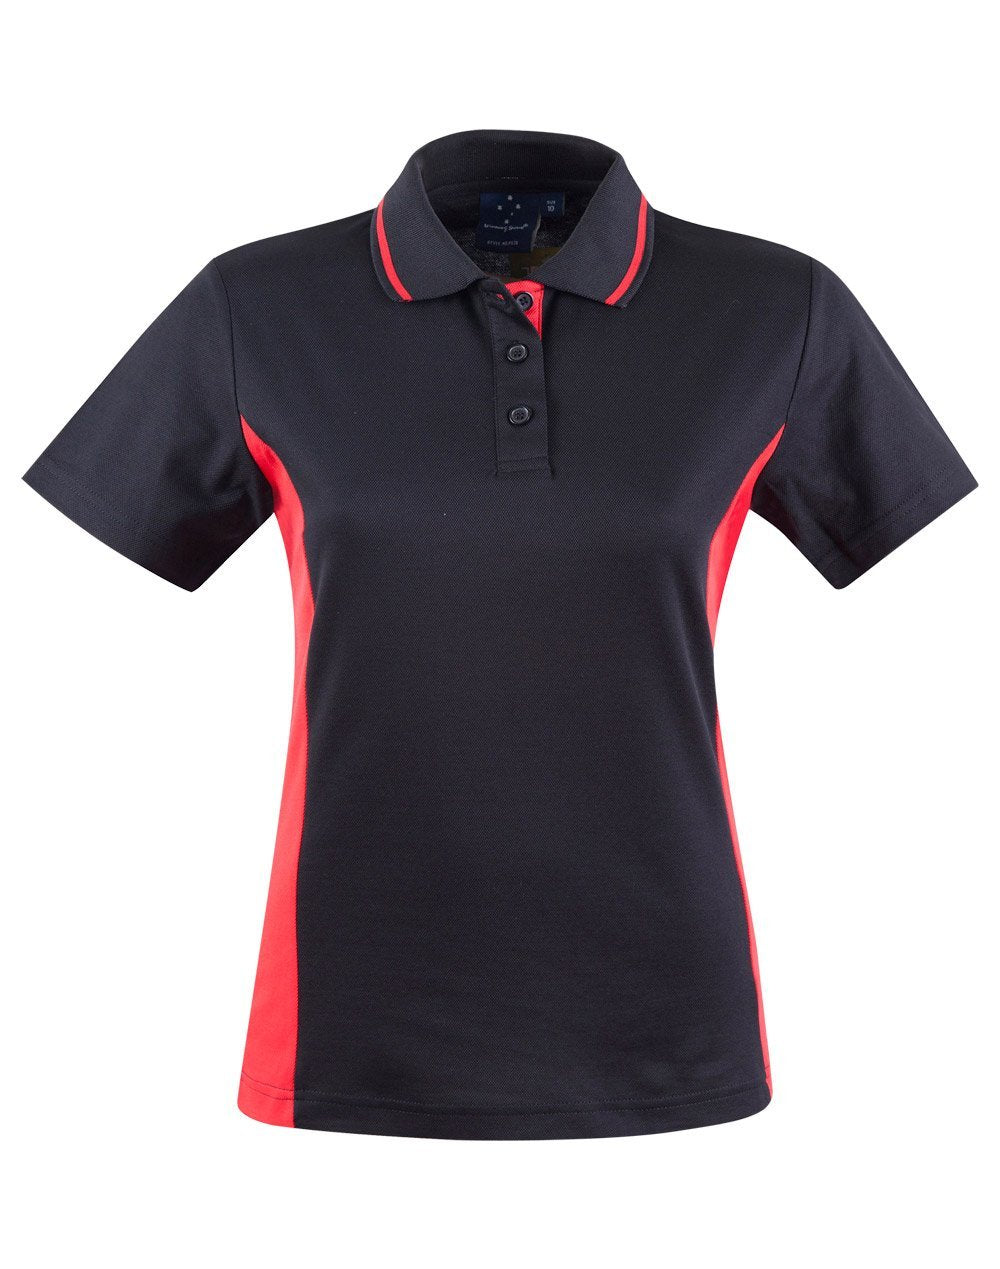 Teammate Polo Shirt Ladies  PS74 Casual Wear Winning Spirit 8 Black/Red 